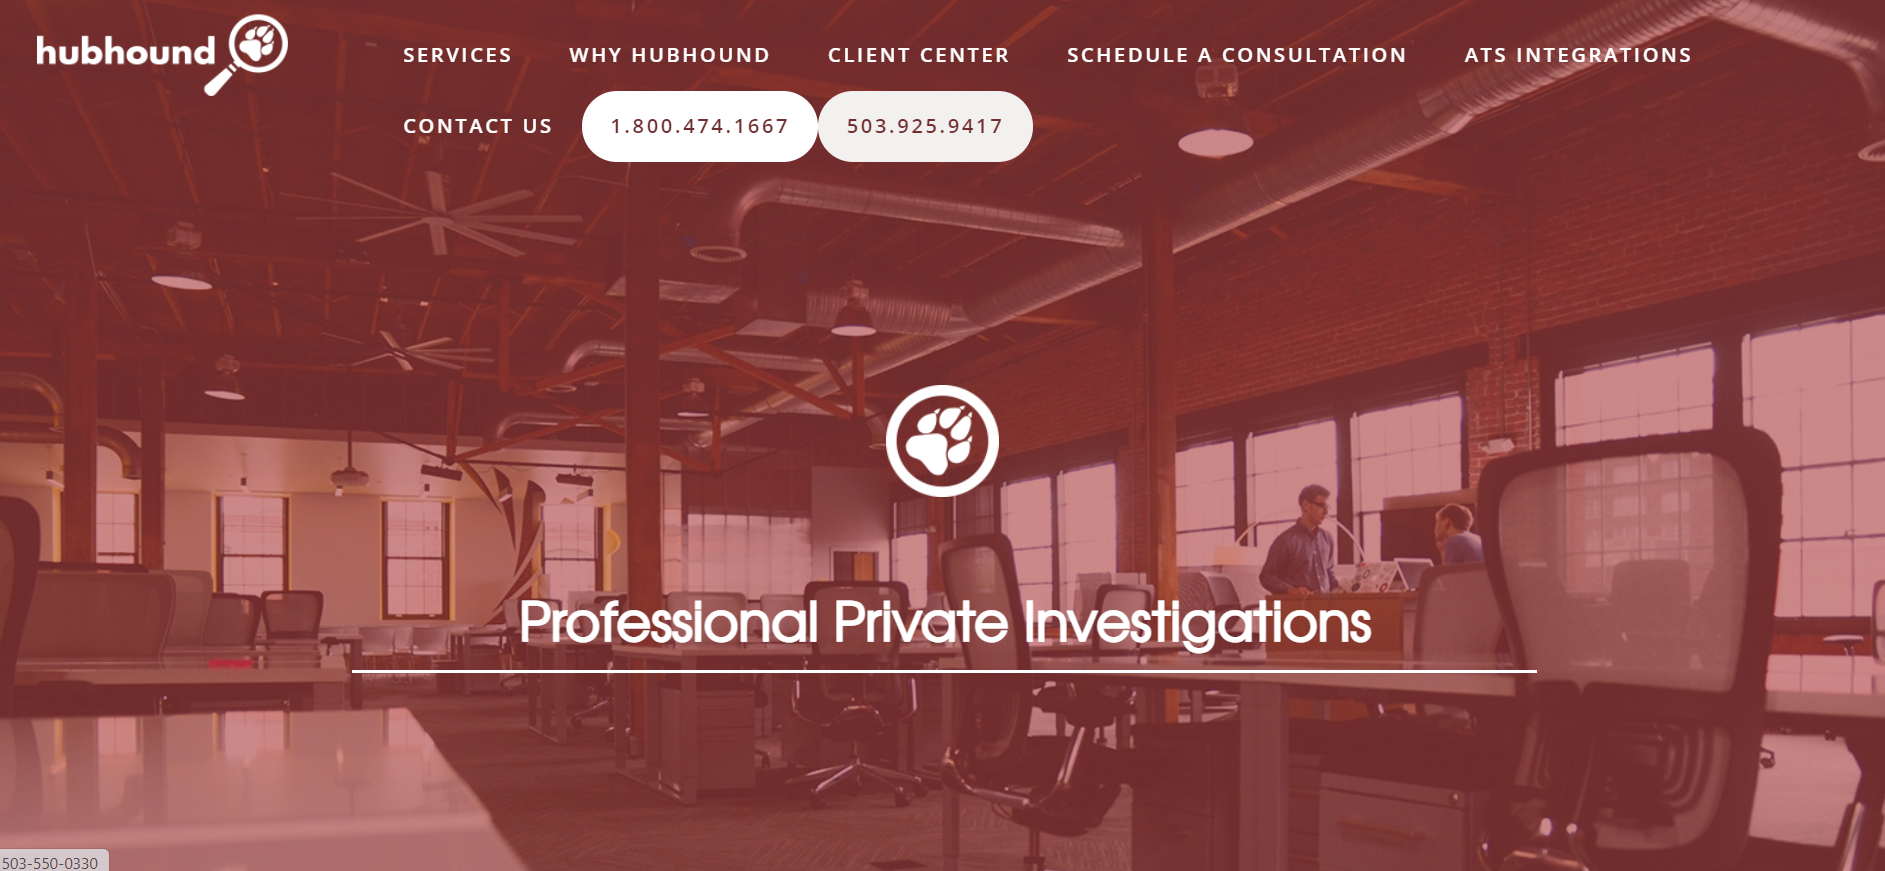 Professional Private Investigation - HubHund